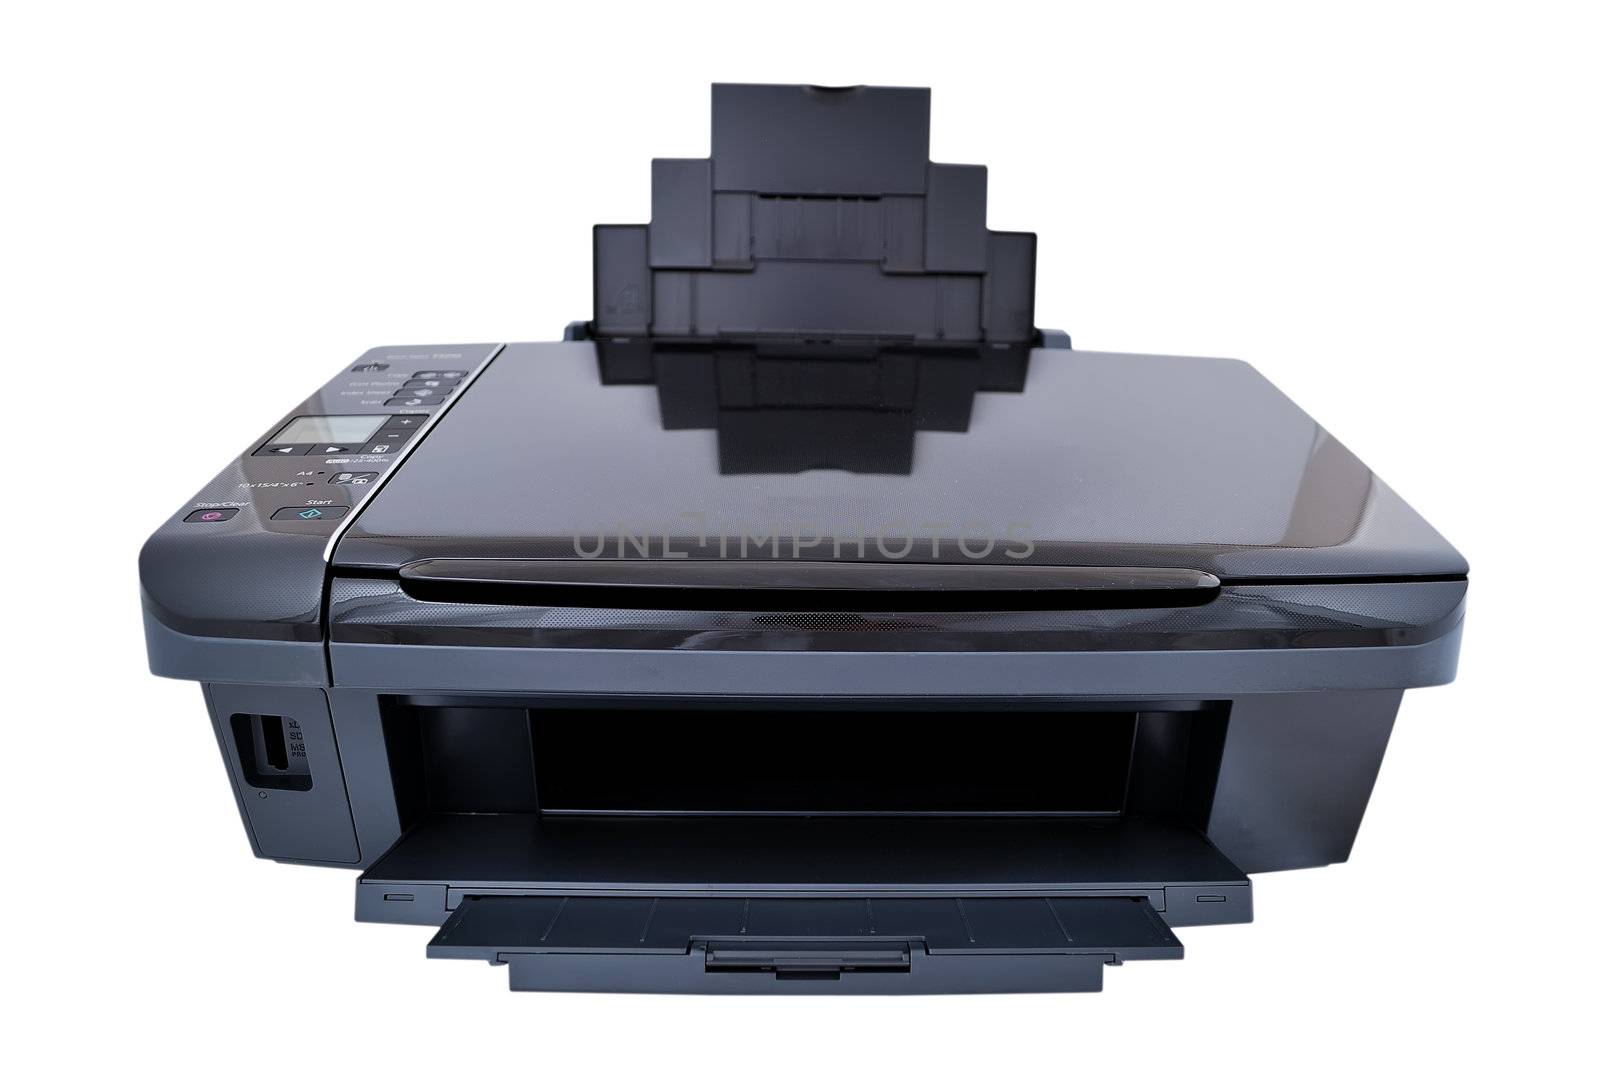 printer by vetkit